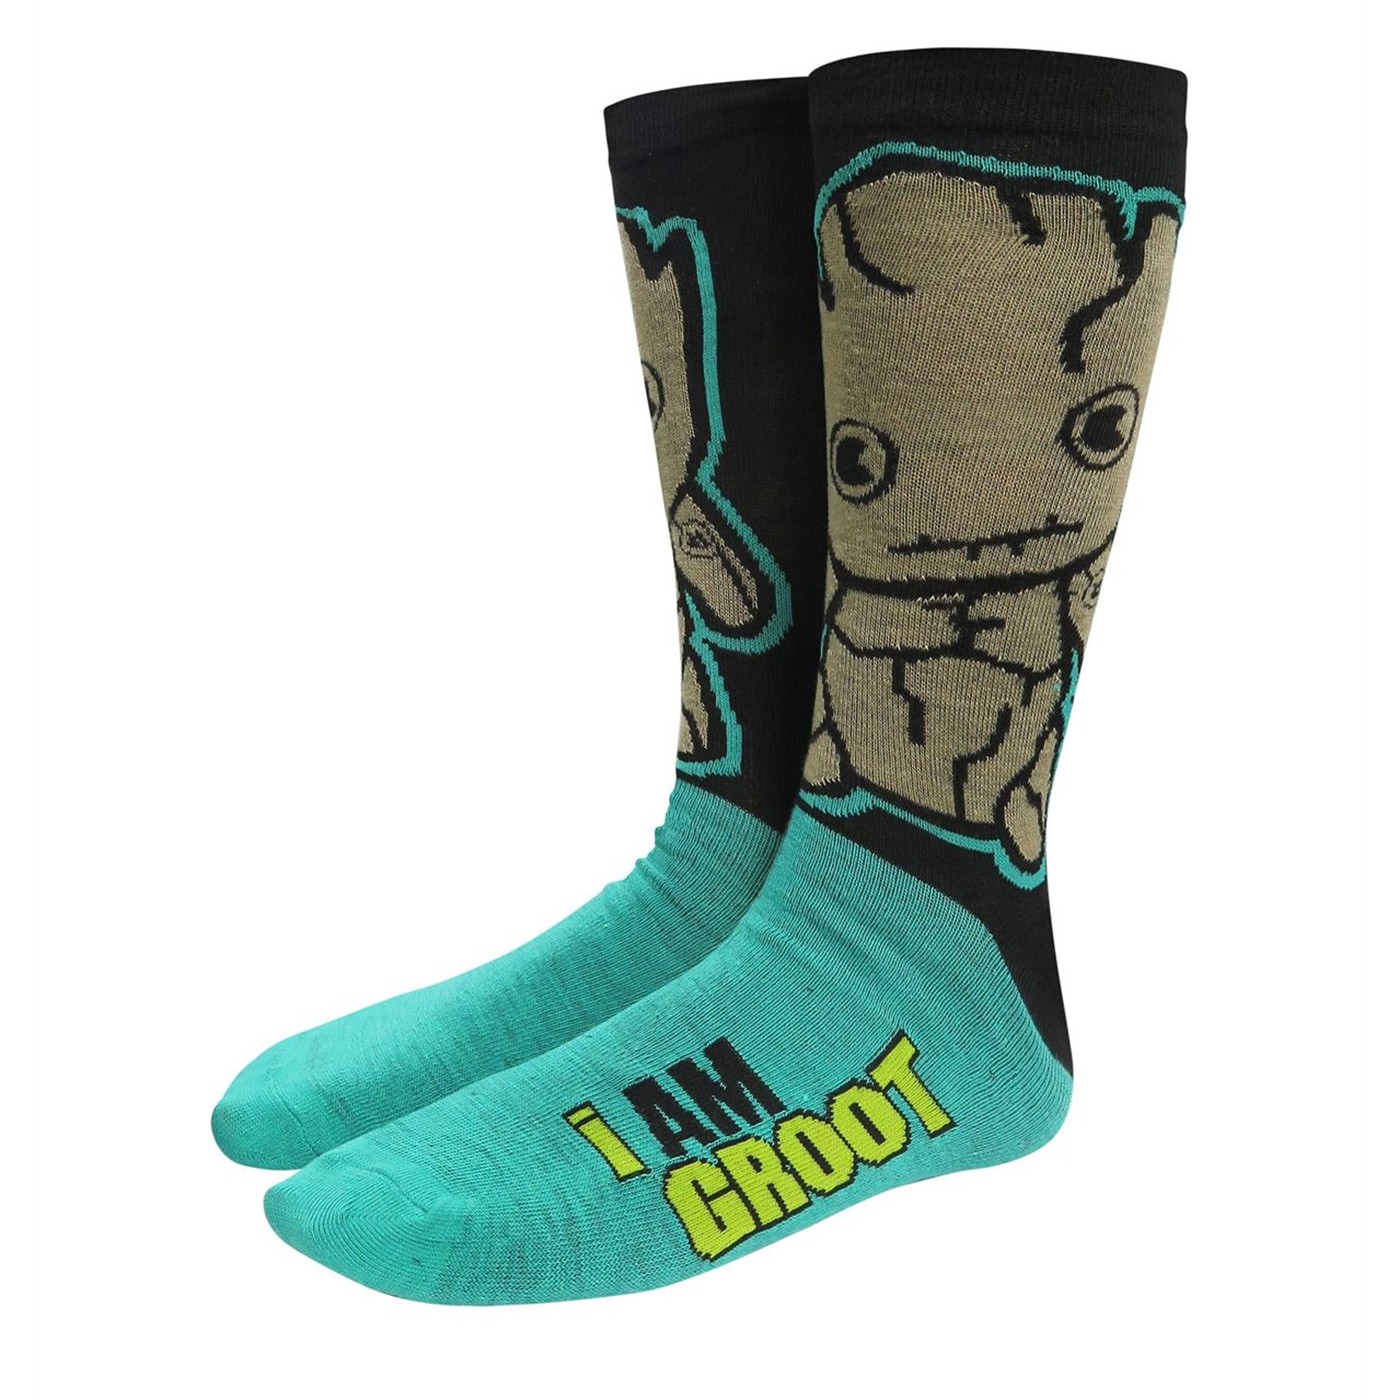 GOTG Cute Groot and Rocket Raccoon Crew Sock 2 Pack